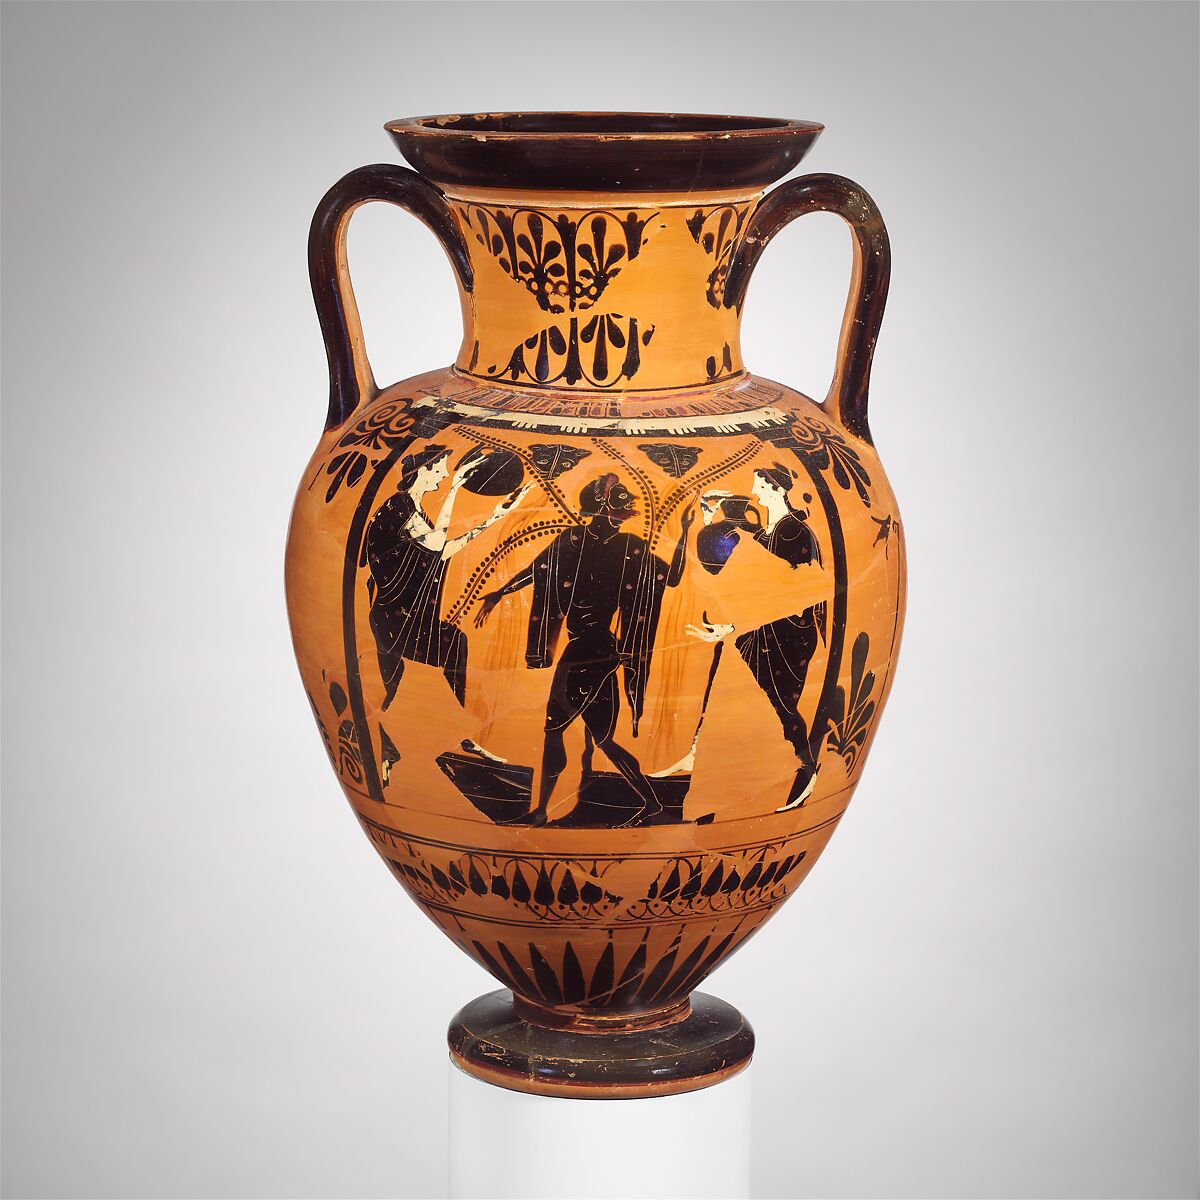 Terracotta neck-amphora (jar), Attributed to the Acheloös Painter, Terracotta, Greek, Attic 